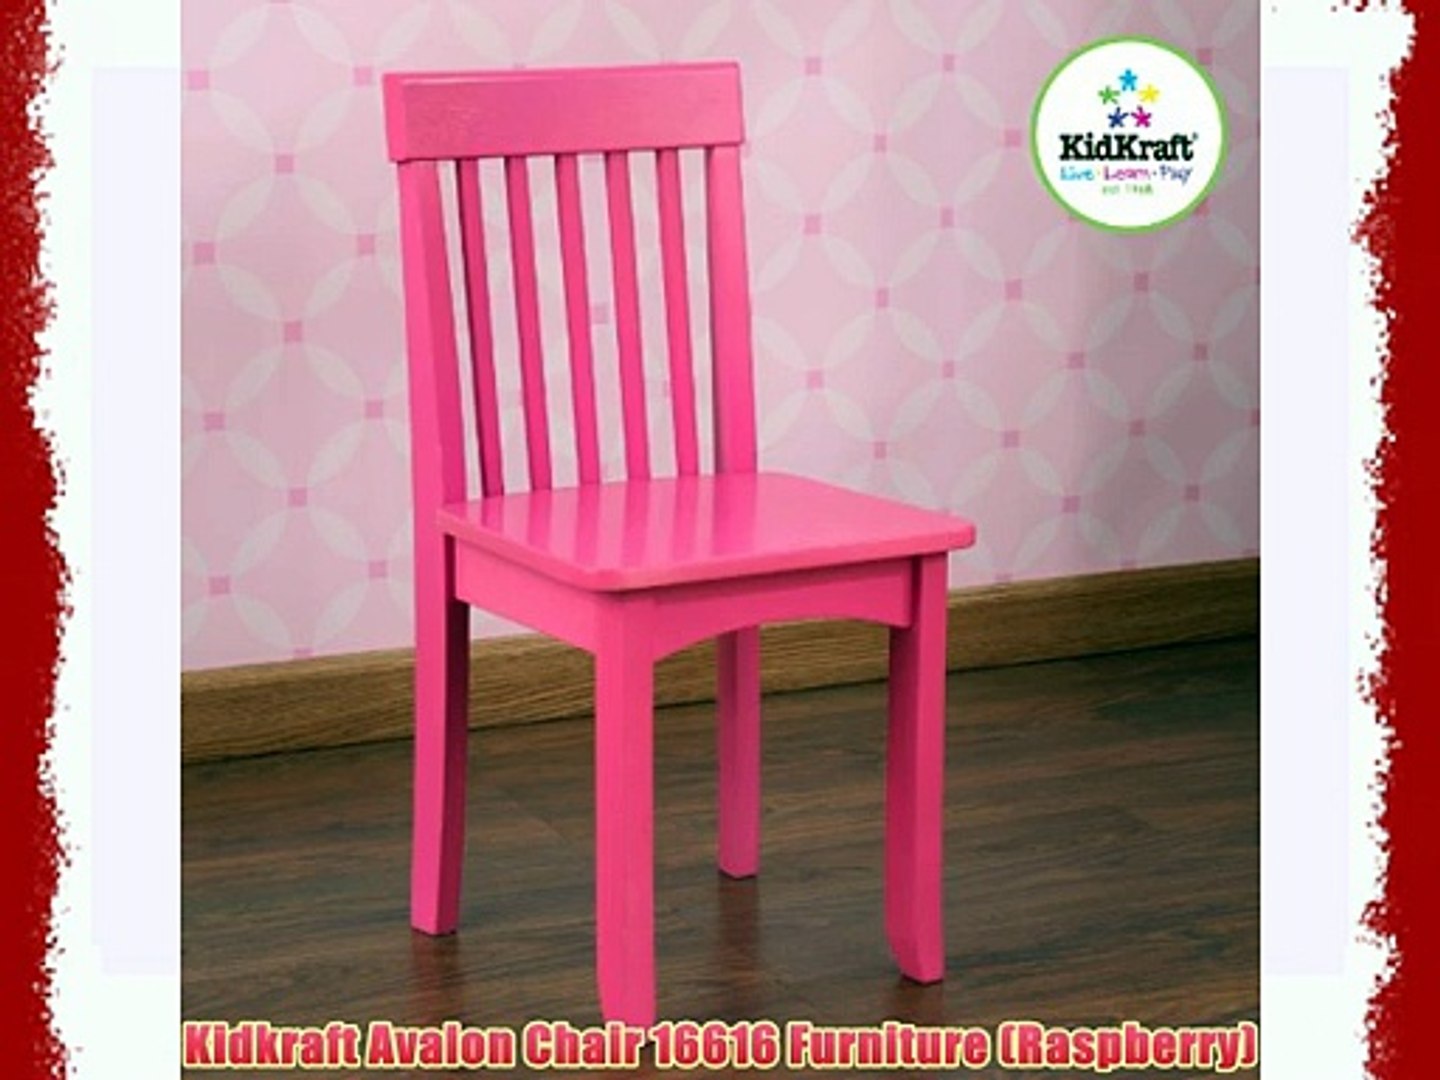 Kidkraft Avalon Chair 16616 Furniture Raspberry Video Dailymotion